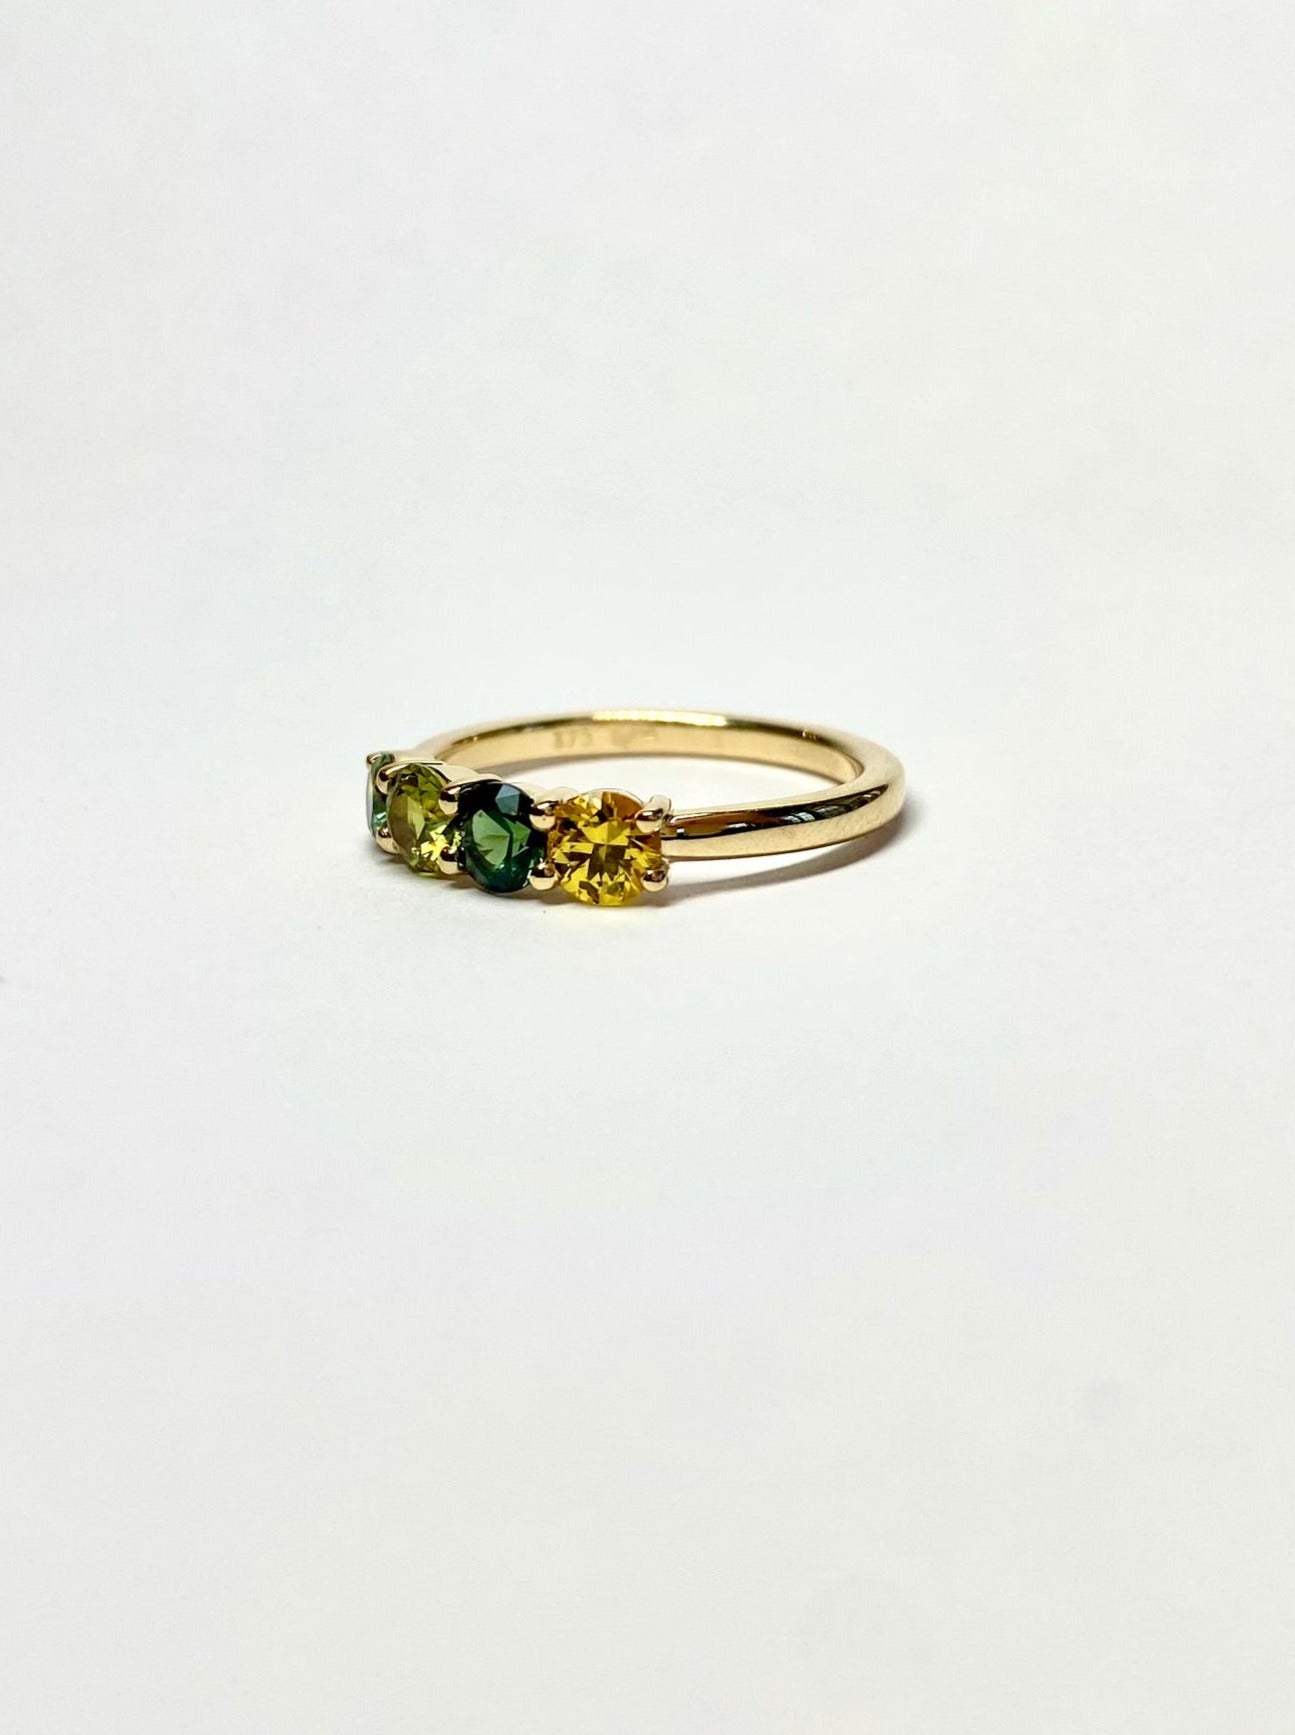 Golden Wattle Palette Sapphire Ring